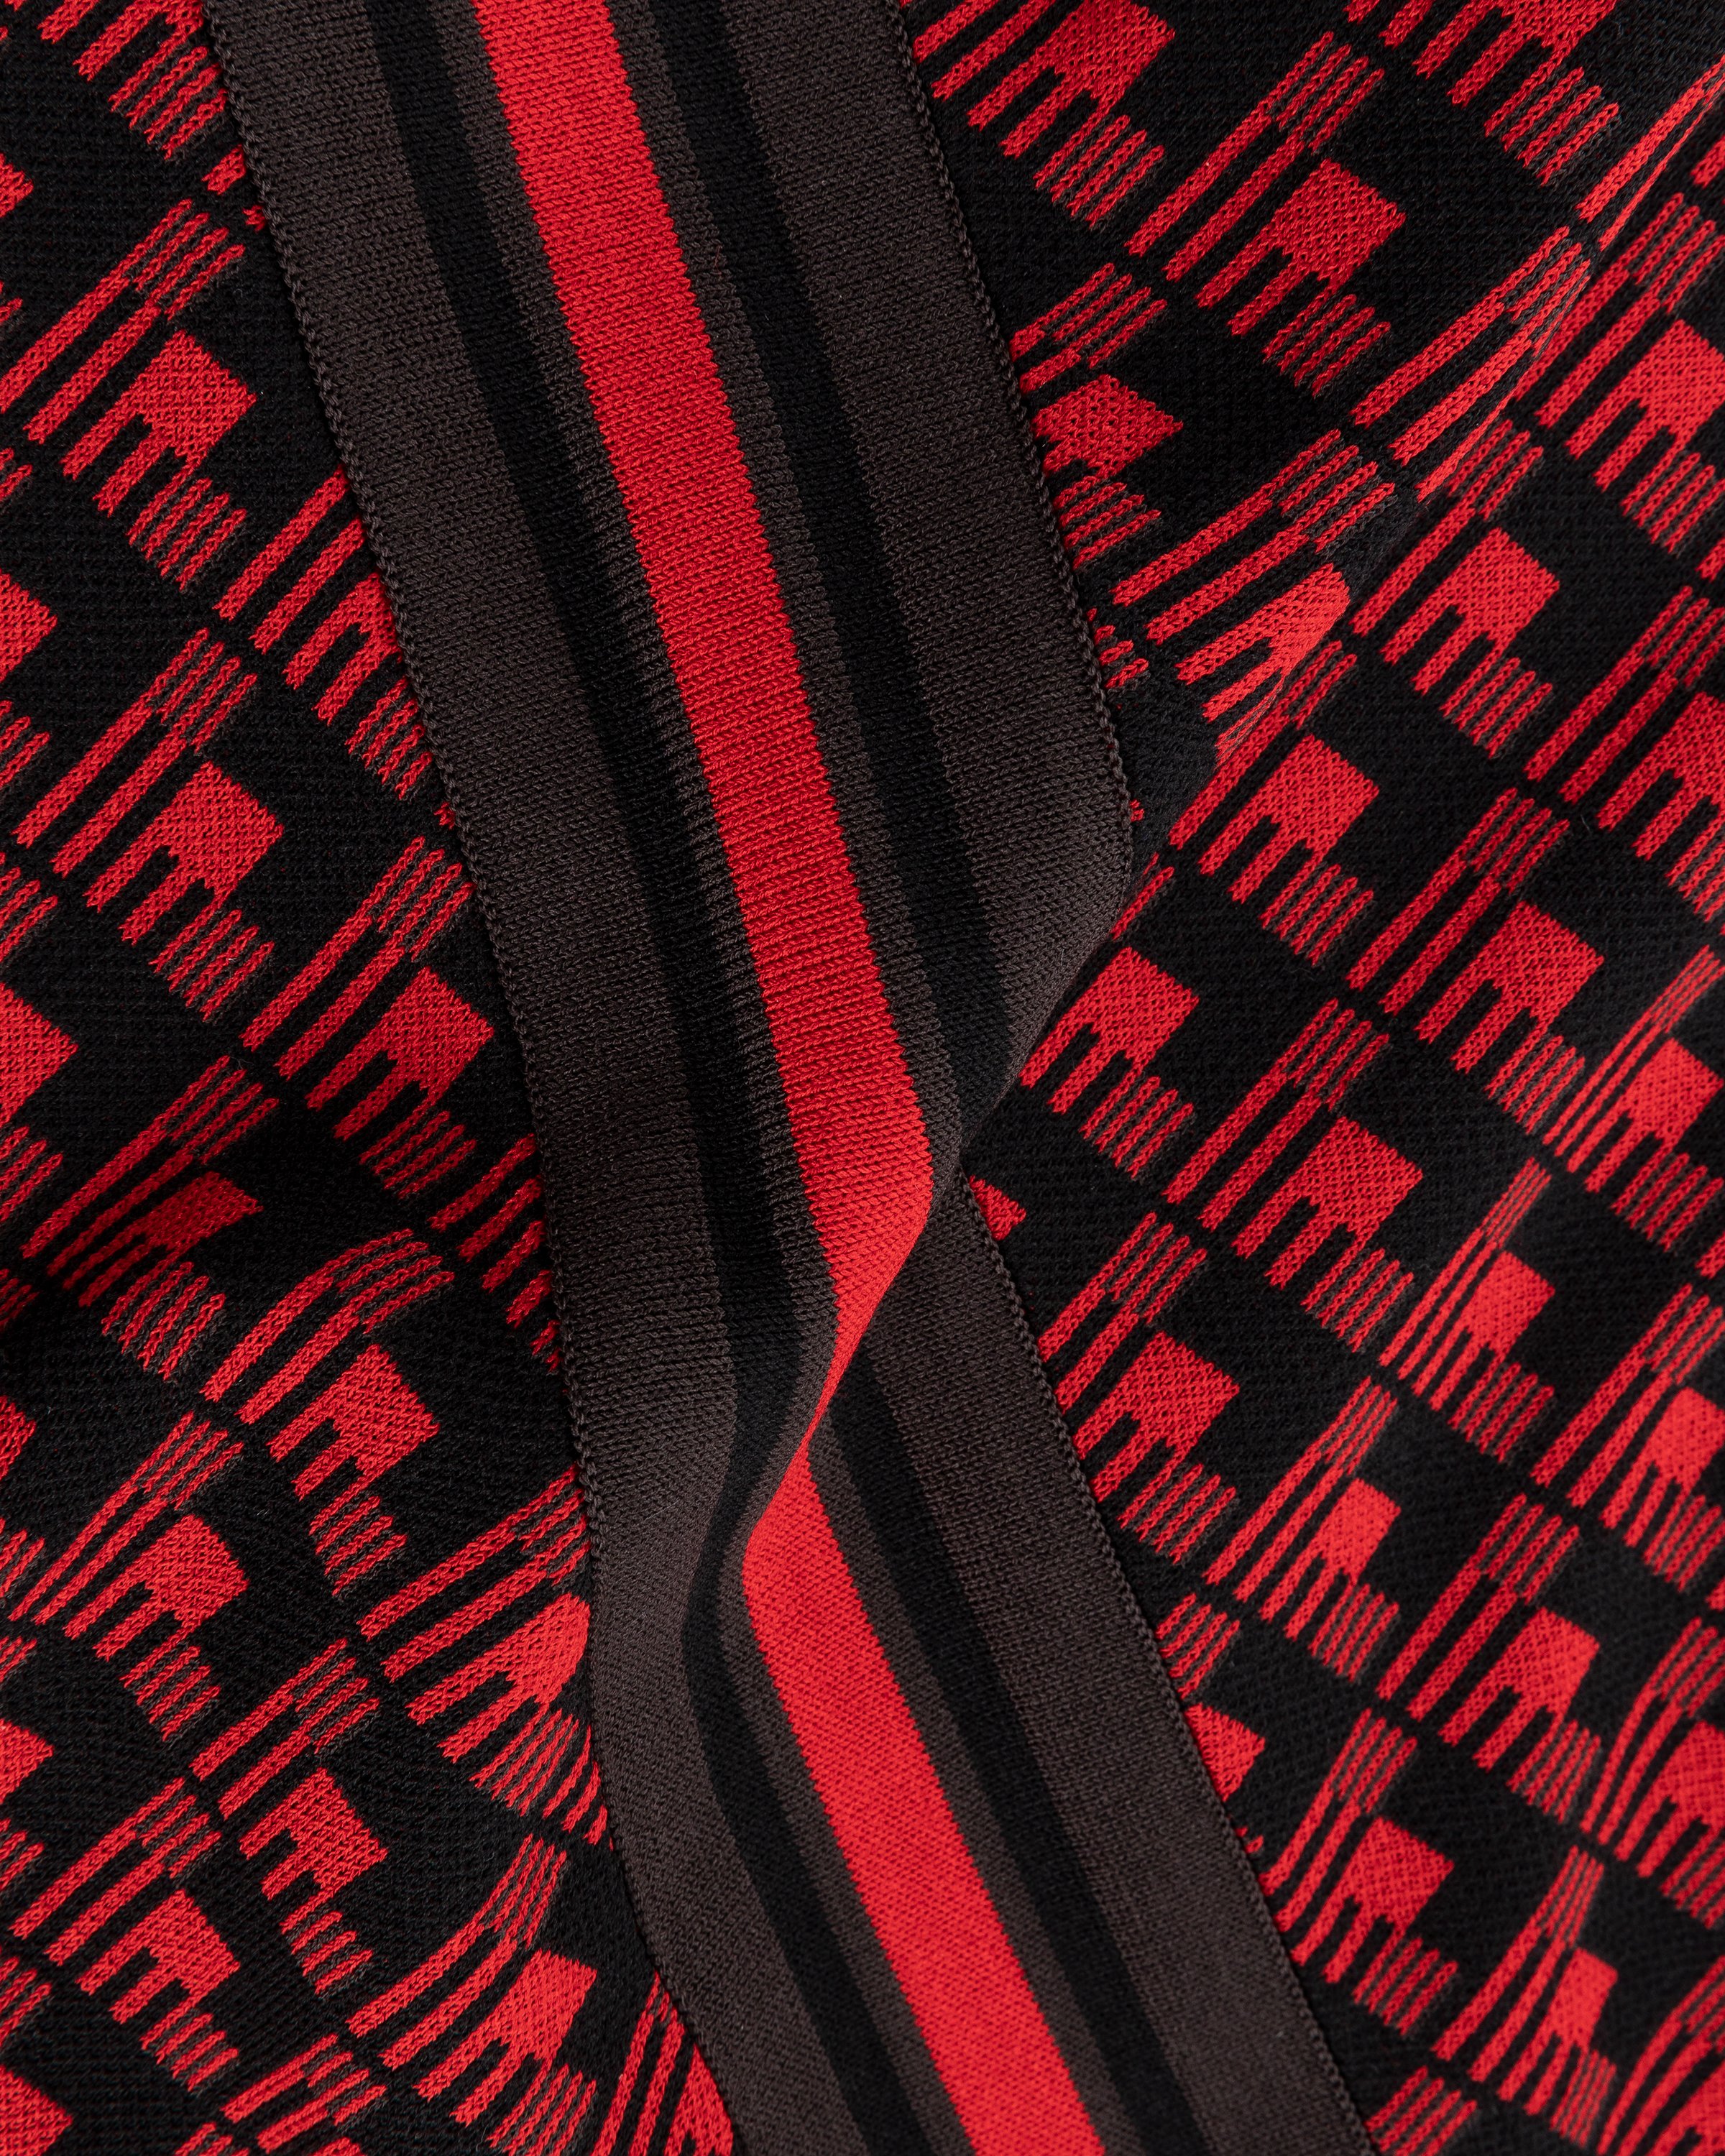 Adidas x Wales Bonner - WB Knit Vest Scarlet/Black - Clothing - Red - Image 5